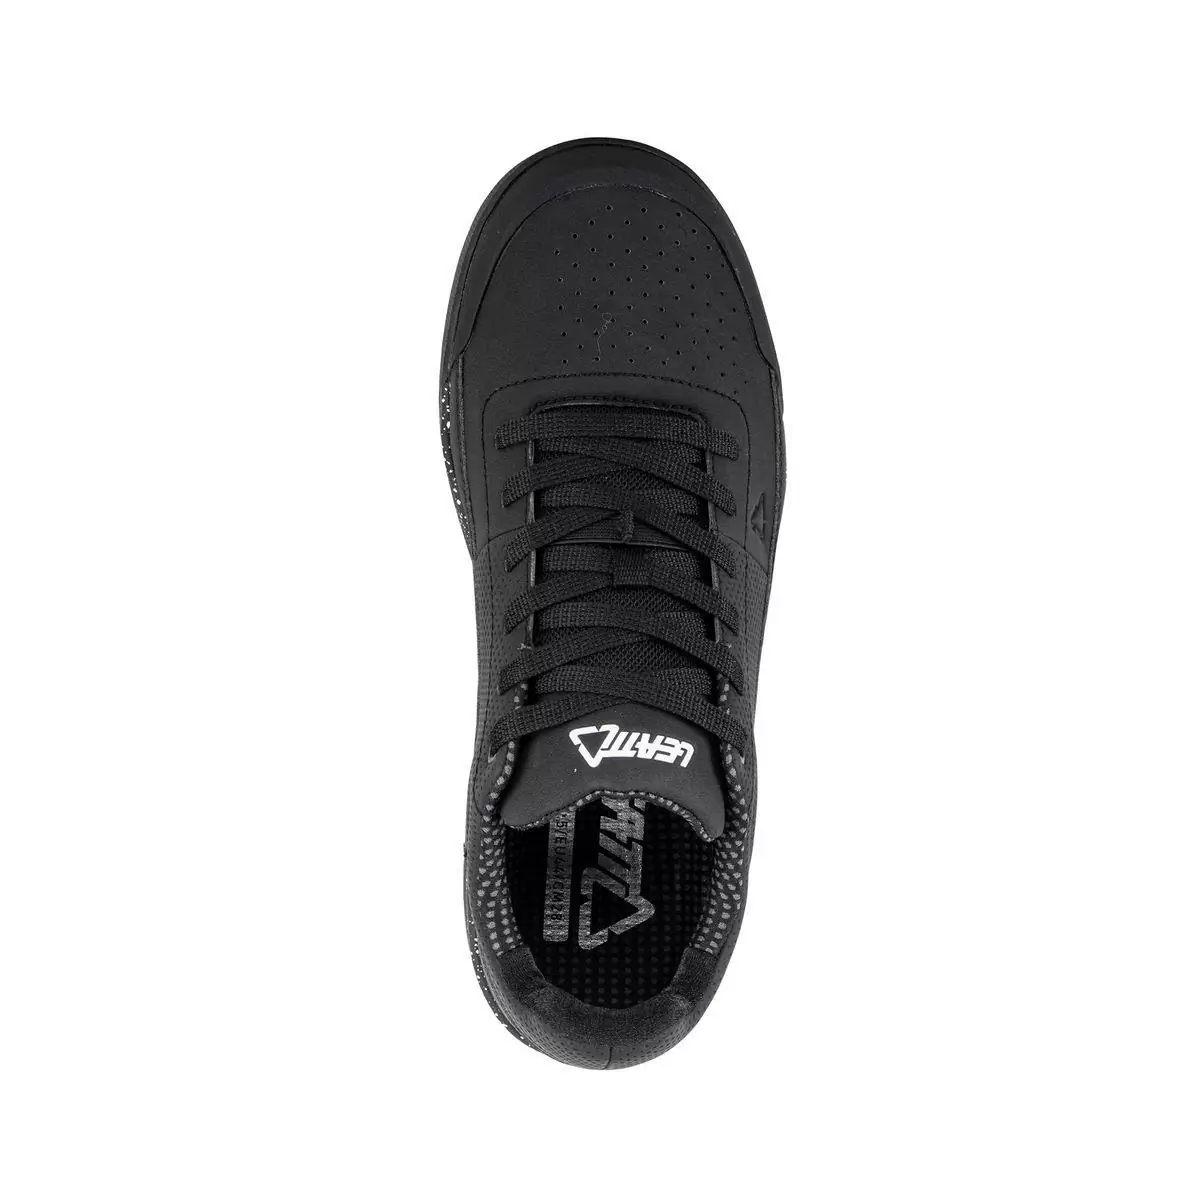 Mtb Shoes 2.0 Flat Black Size 47 #2